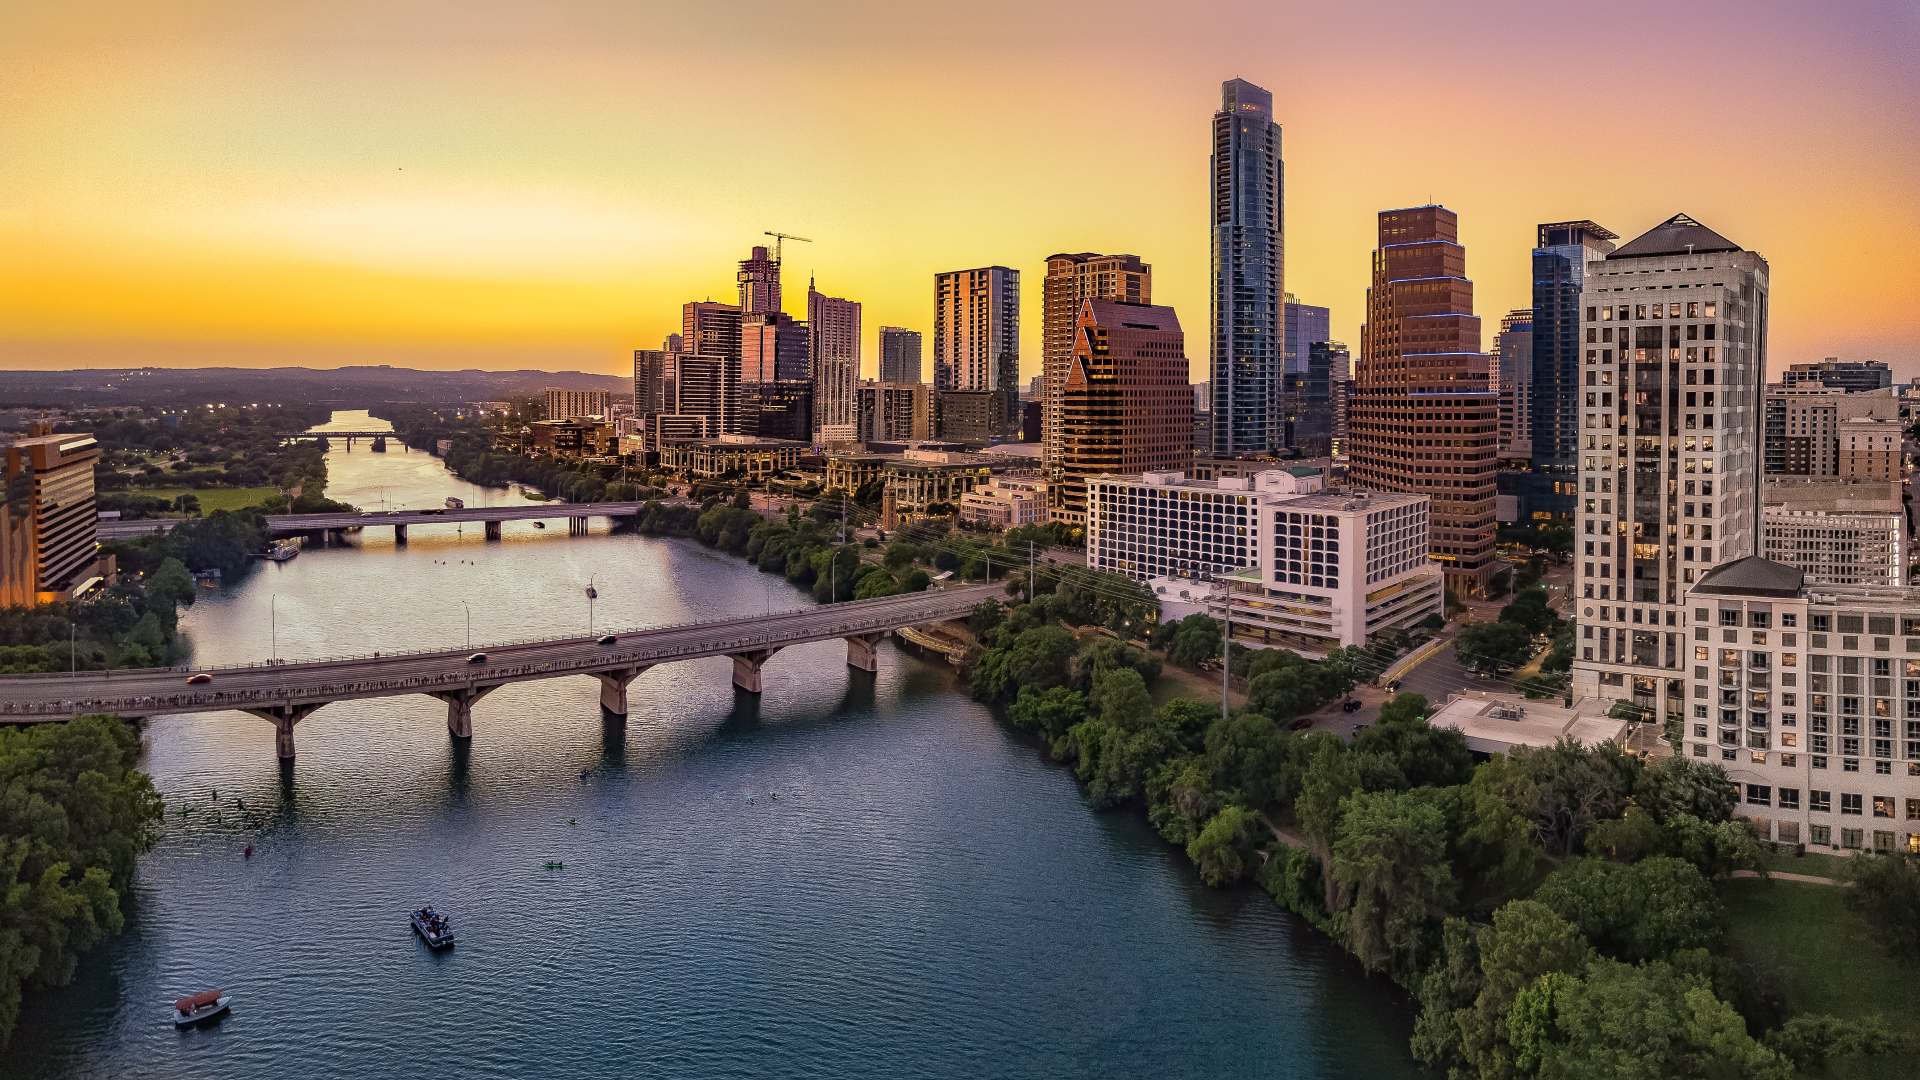 View of Austin's bridge in Austin, TX.